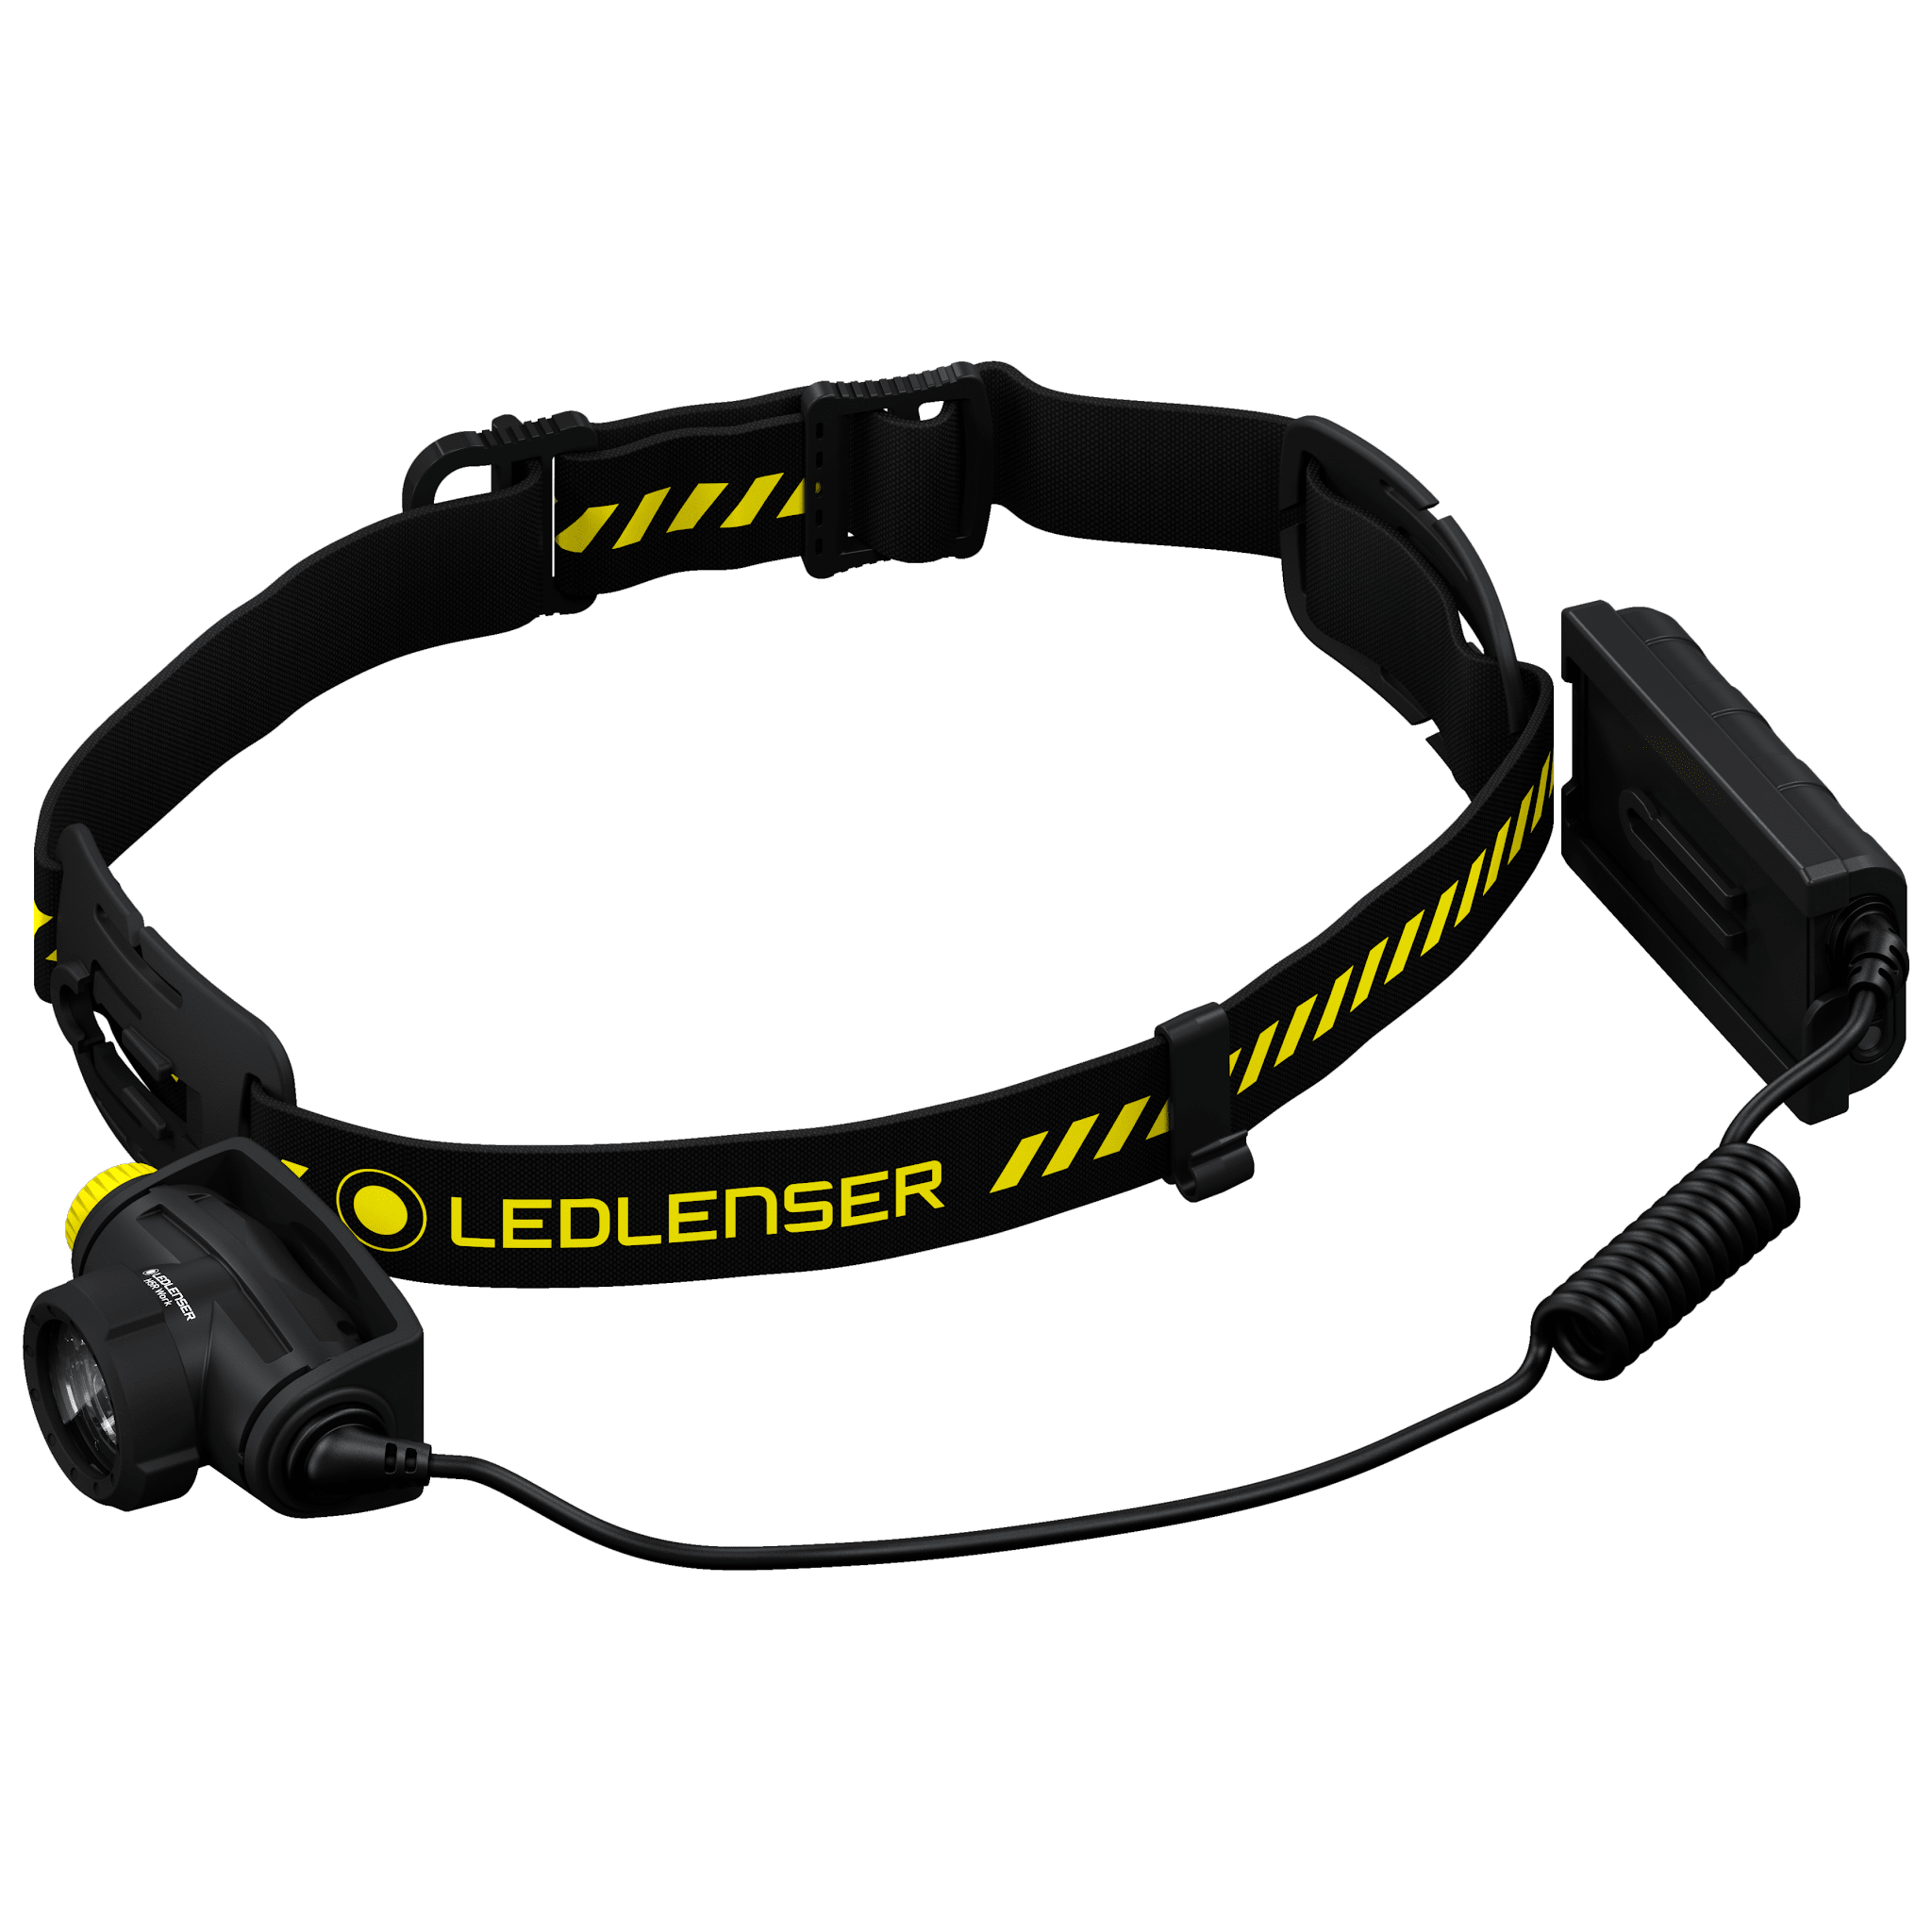 Ledlenser H5R Work Headlamp